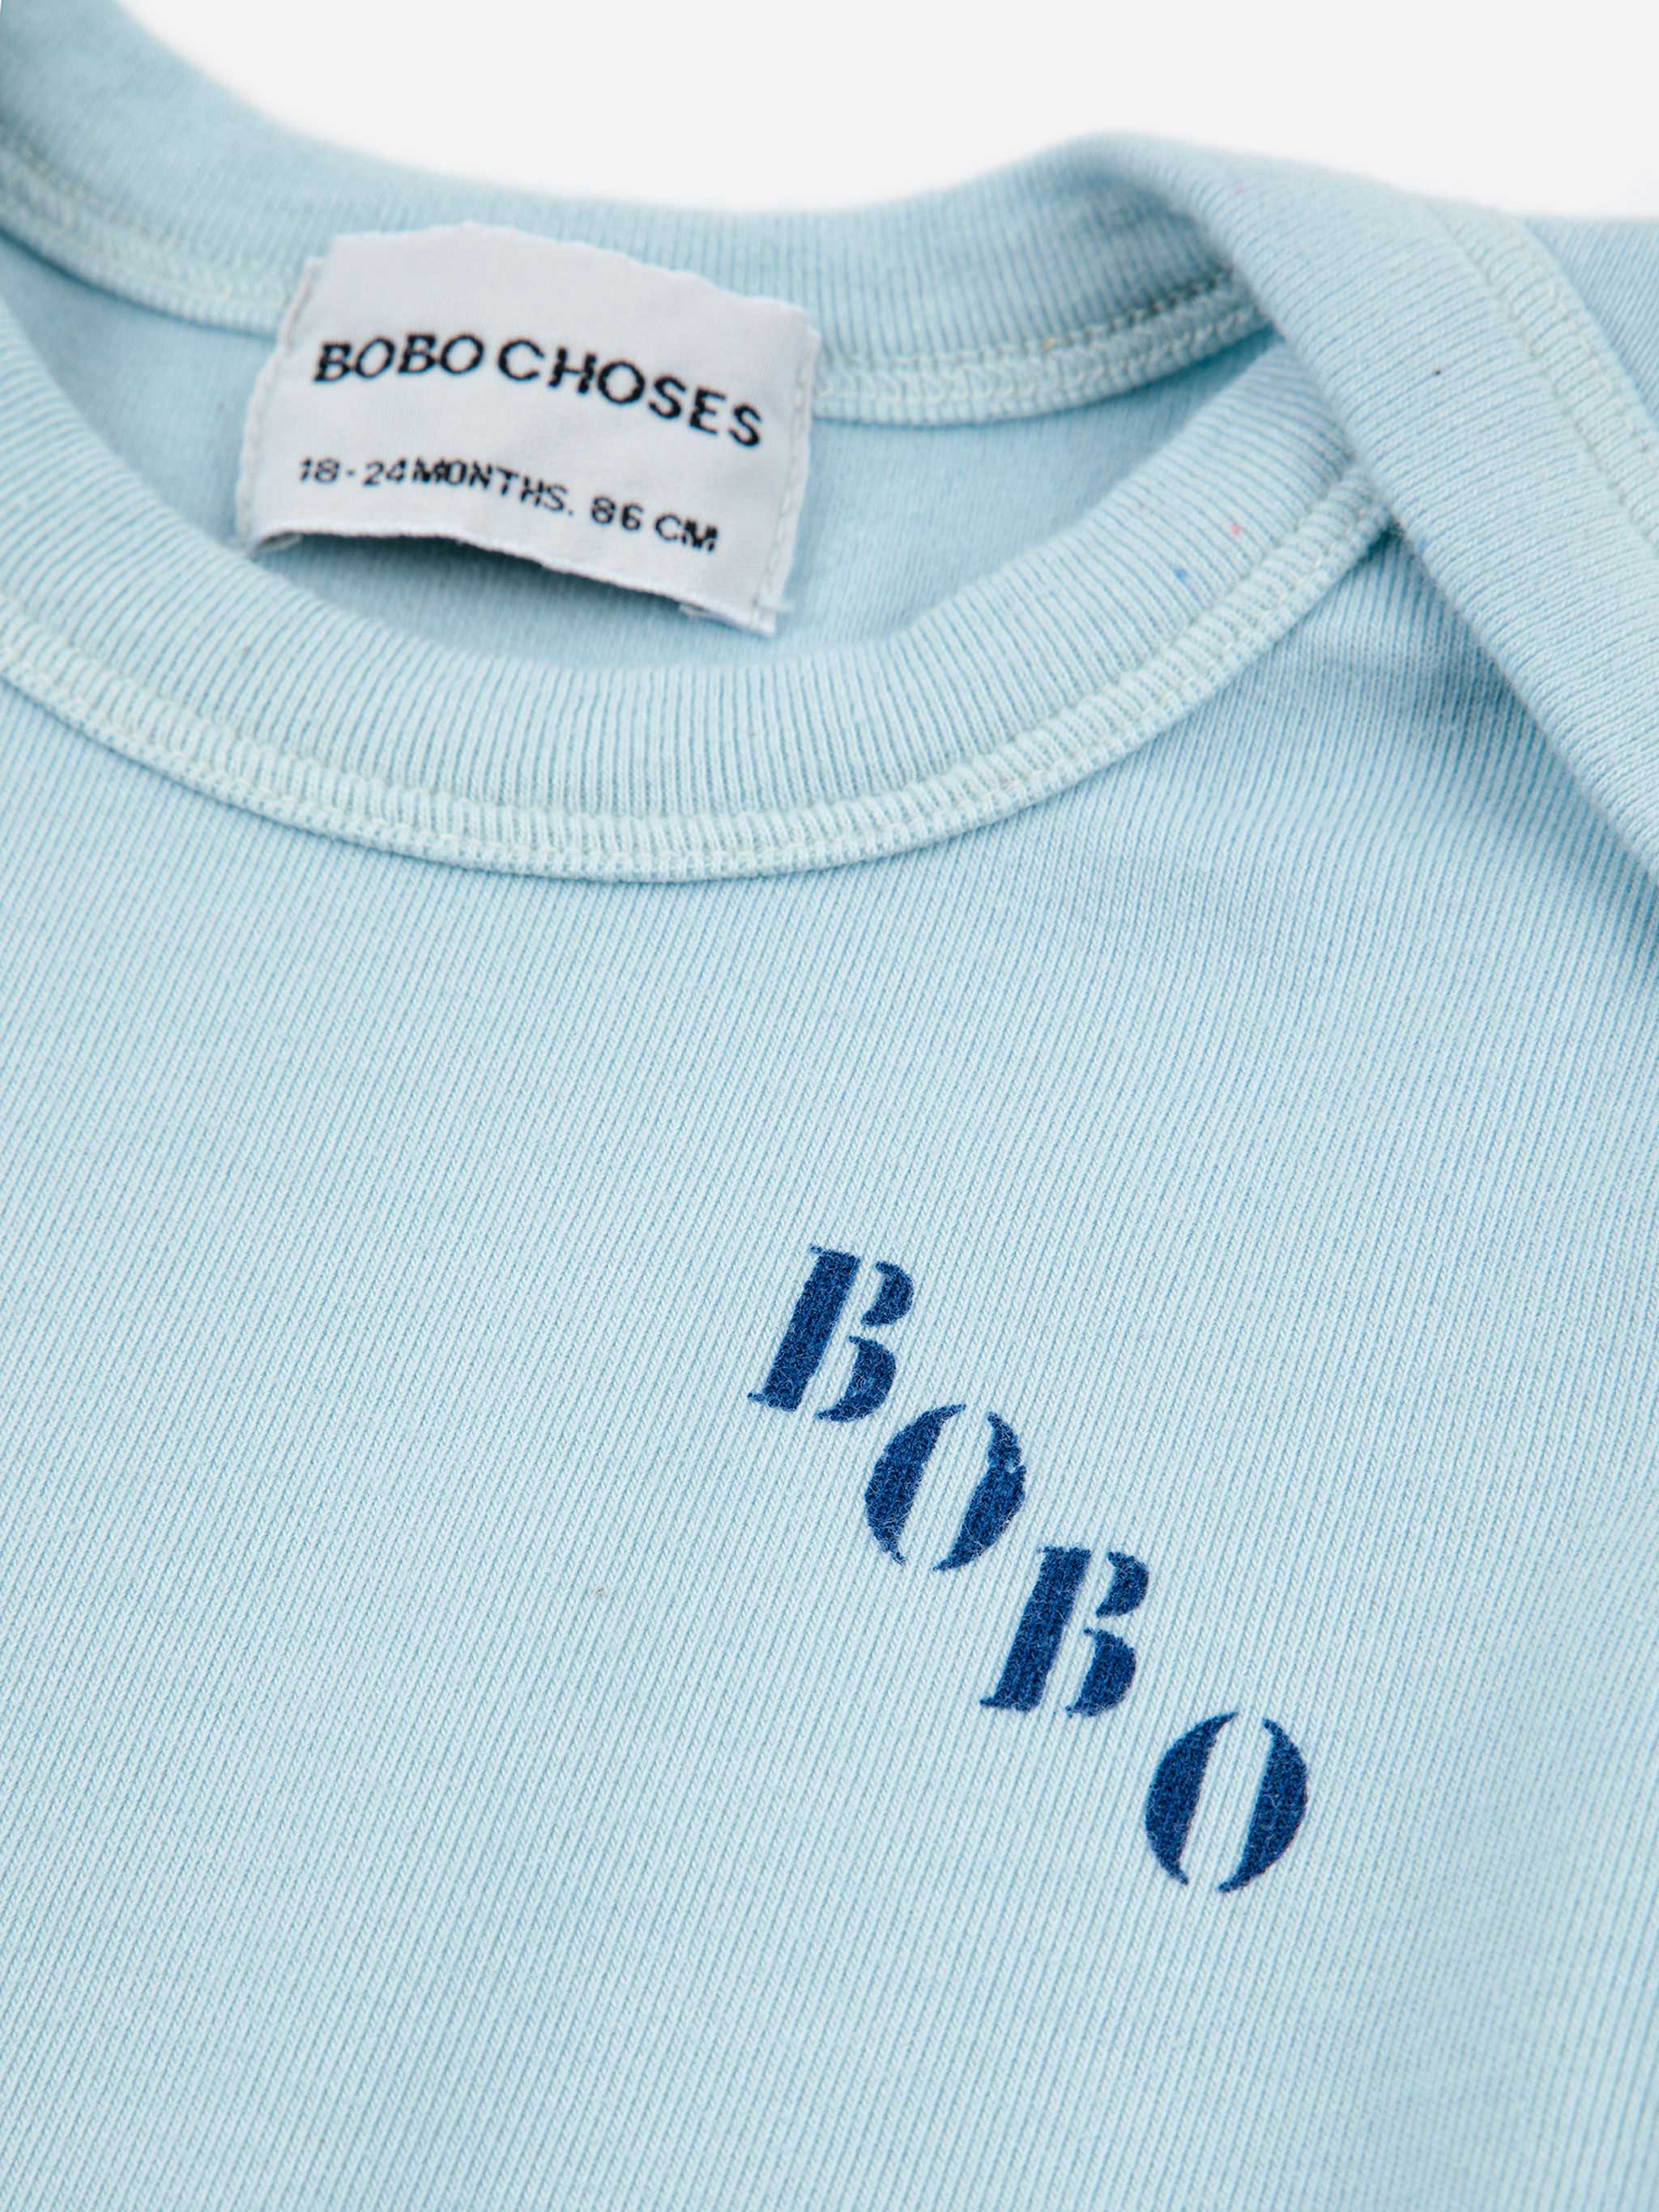 Bobo Choses AW22 Excl. Online Bobo Baby collection